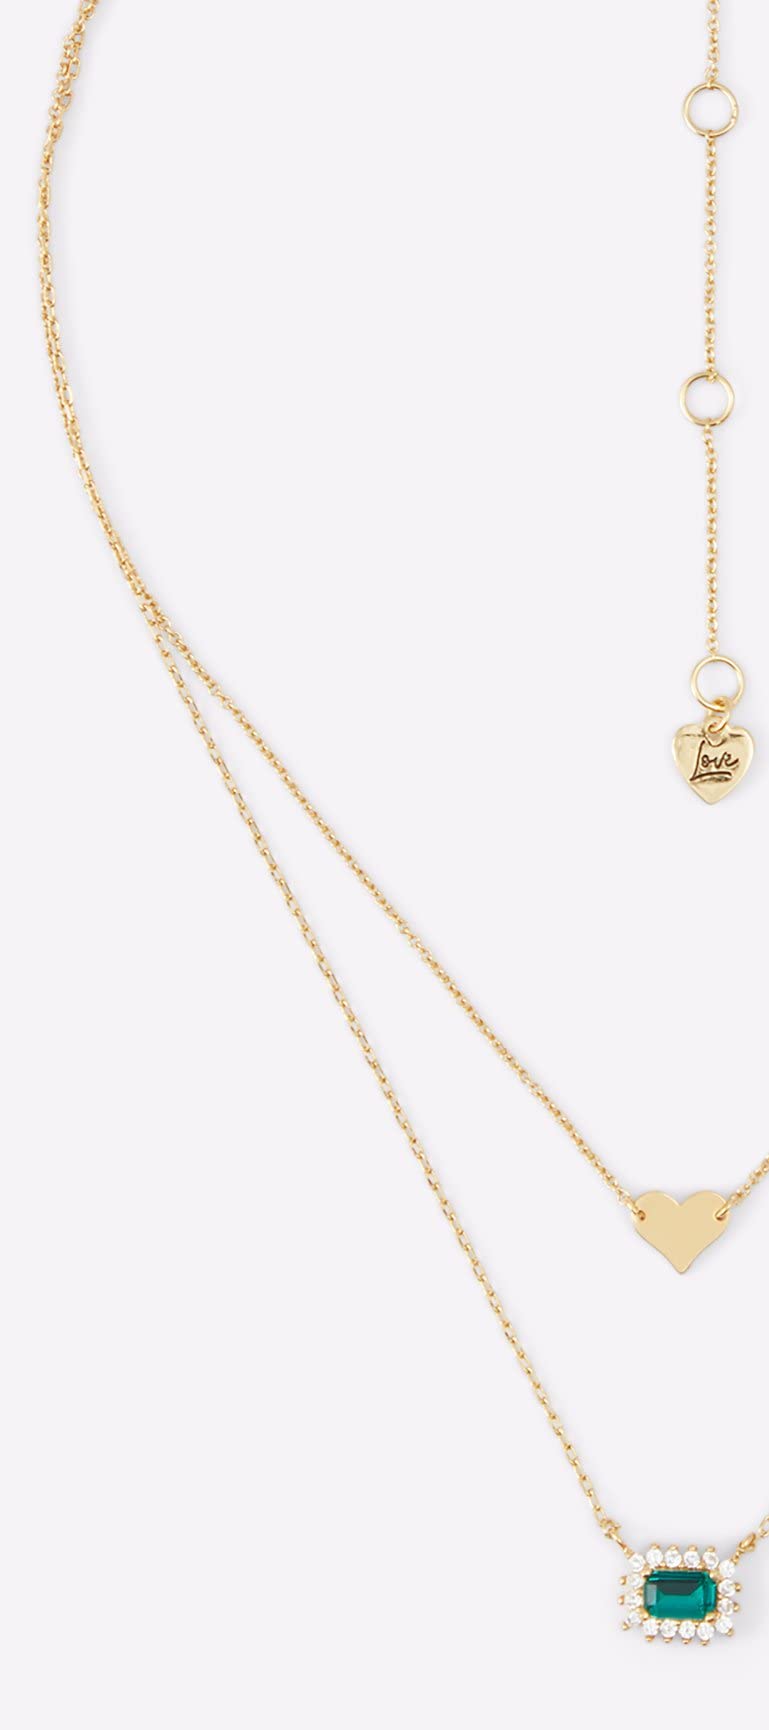 Aldo Women's Valaever Chain Necklace, Gold/Green